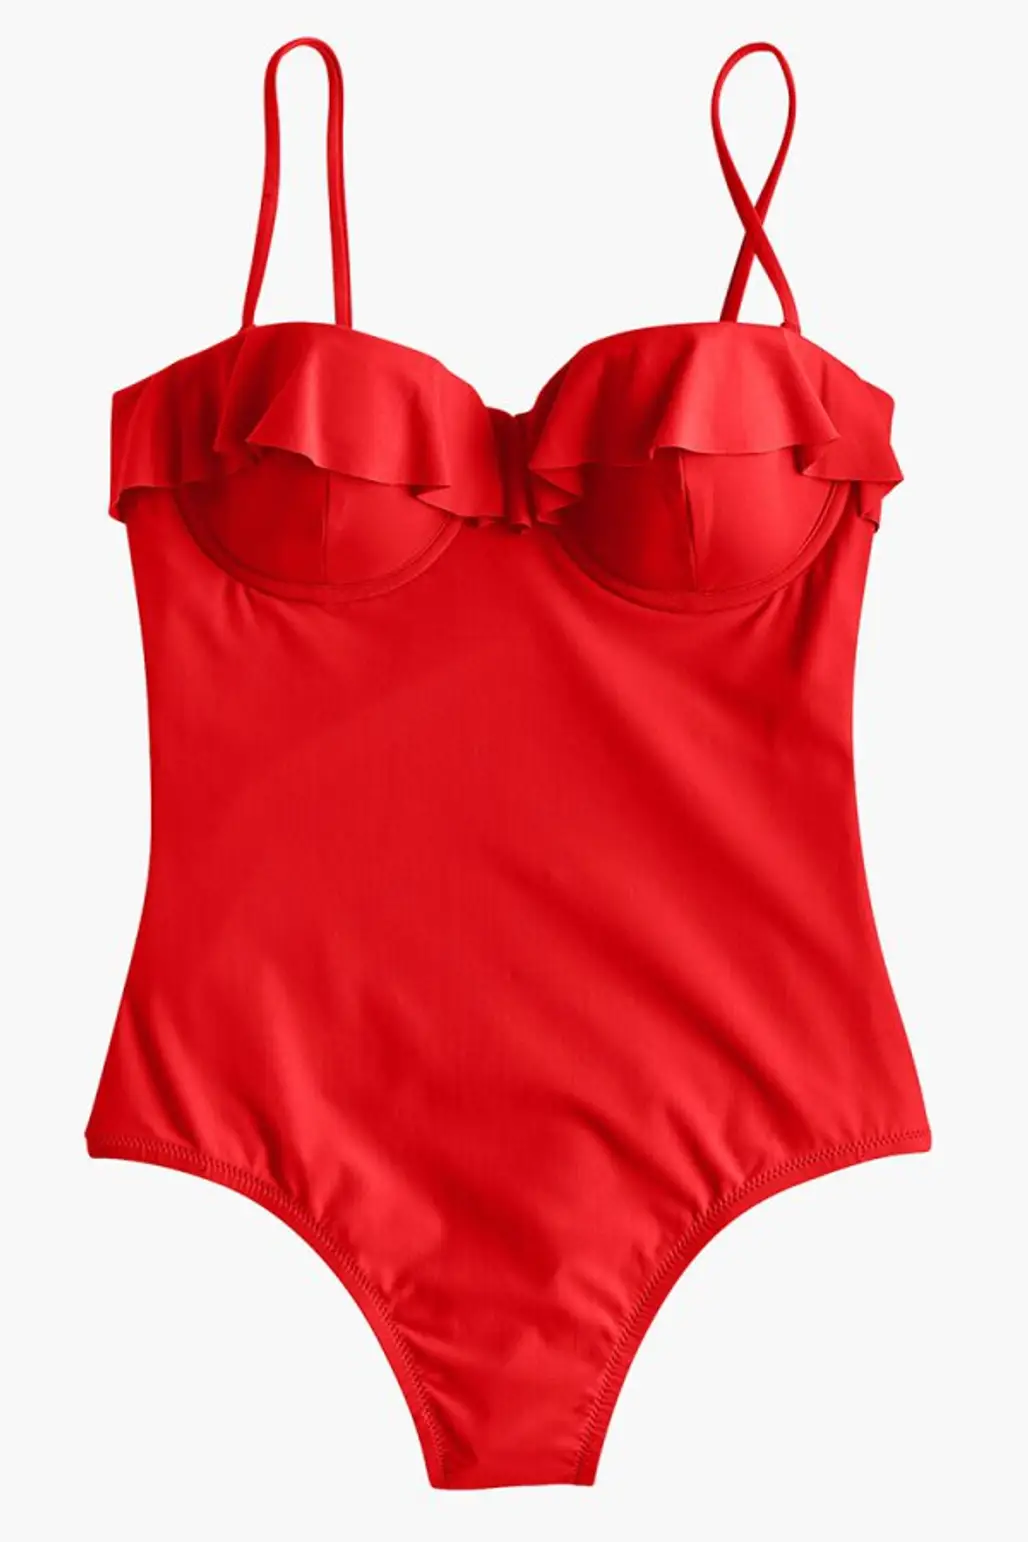 clothing, red, undergarment, product, swimwear,